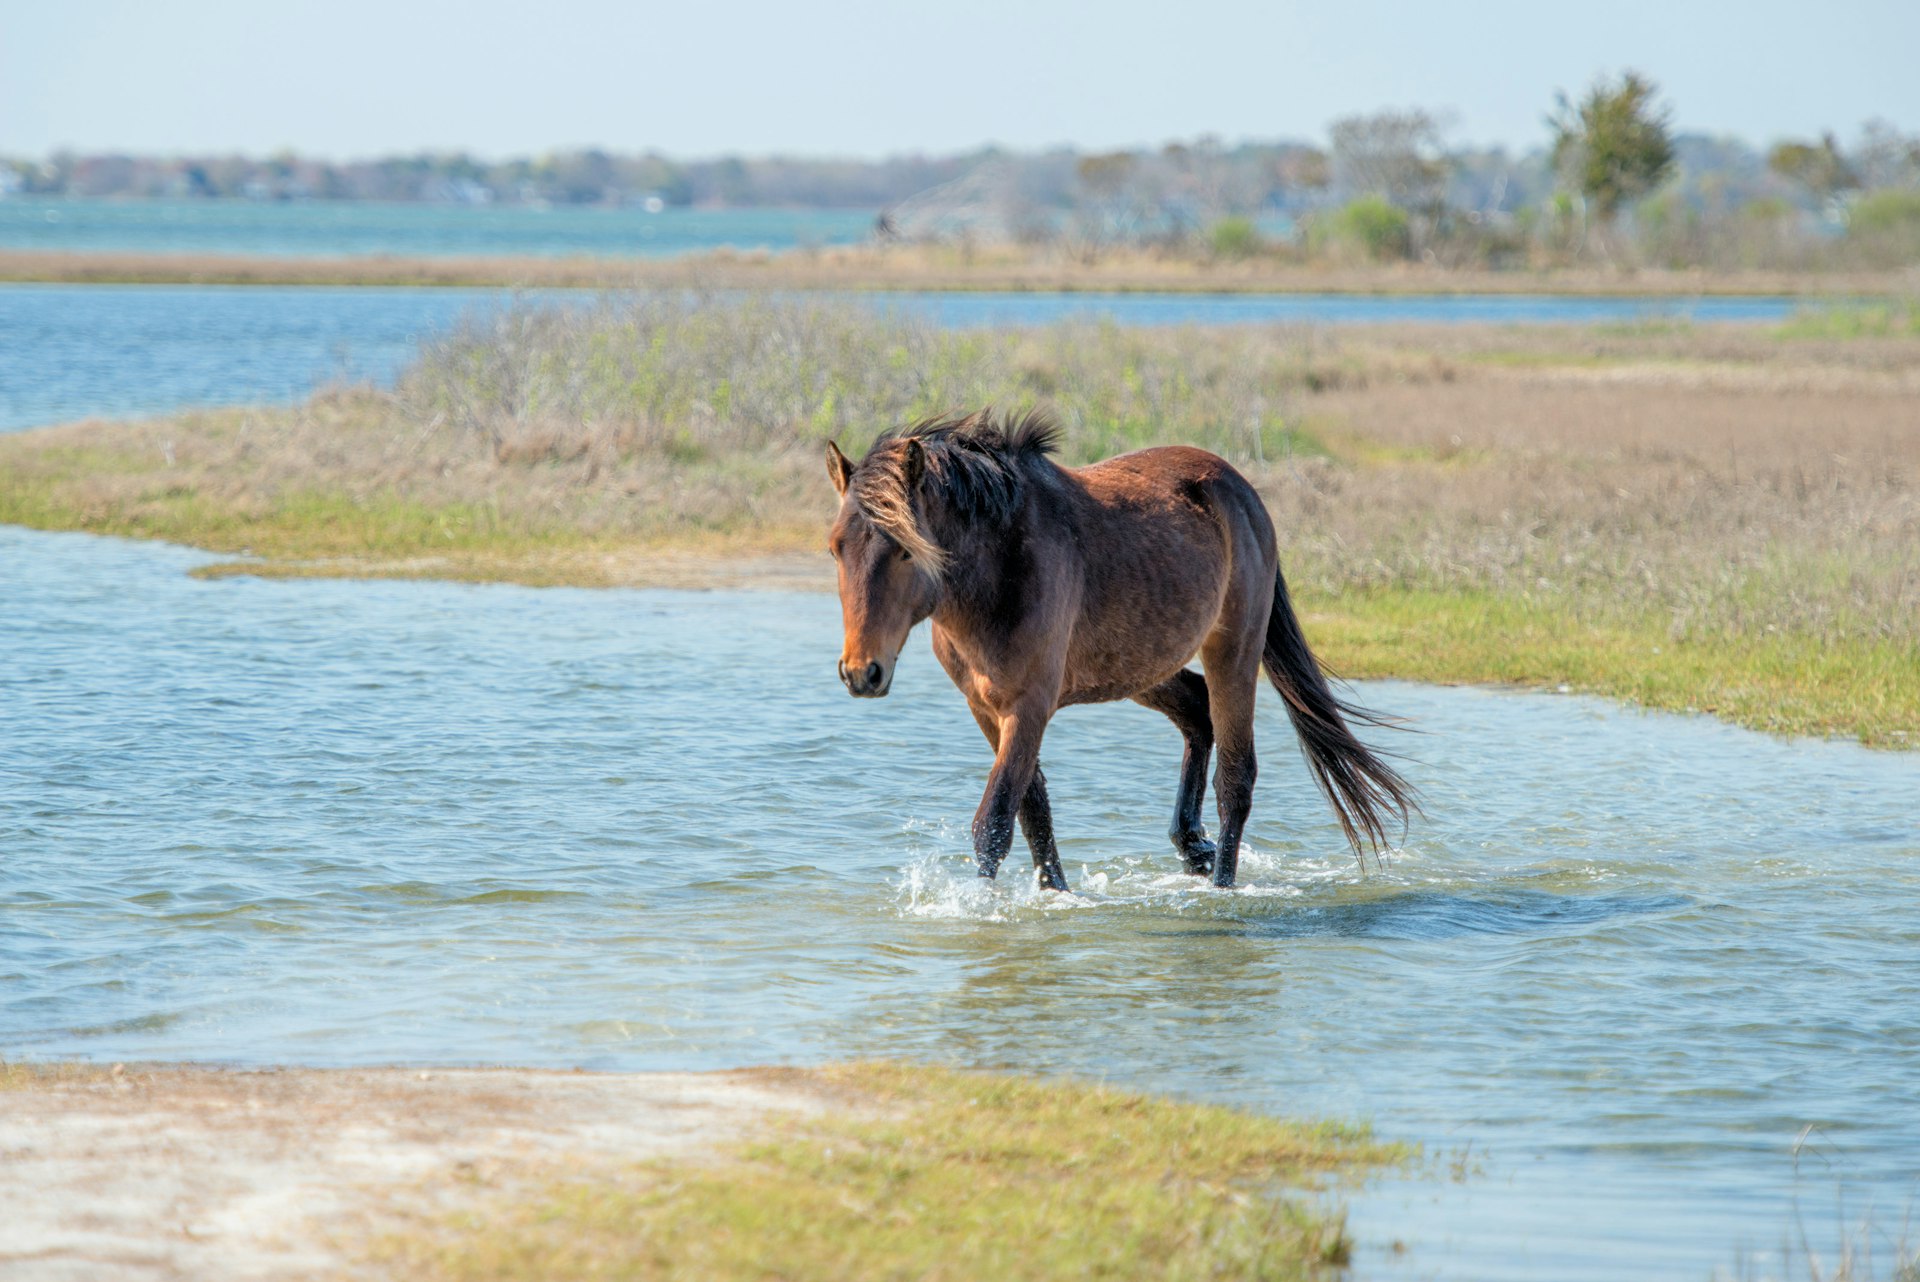 A wild pony wades through water along the beach at Assateague Island, Virginia